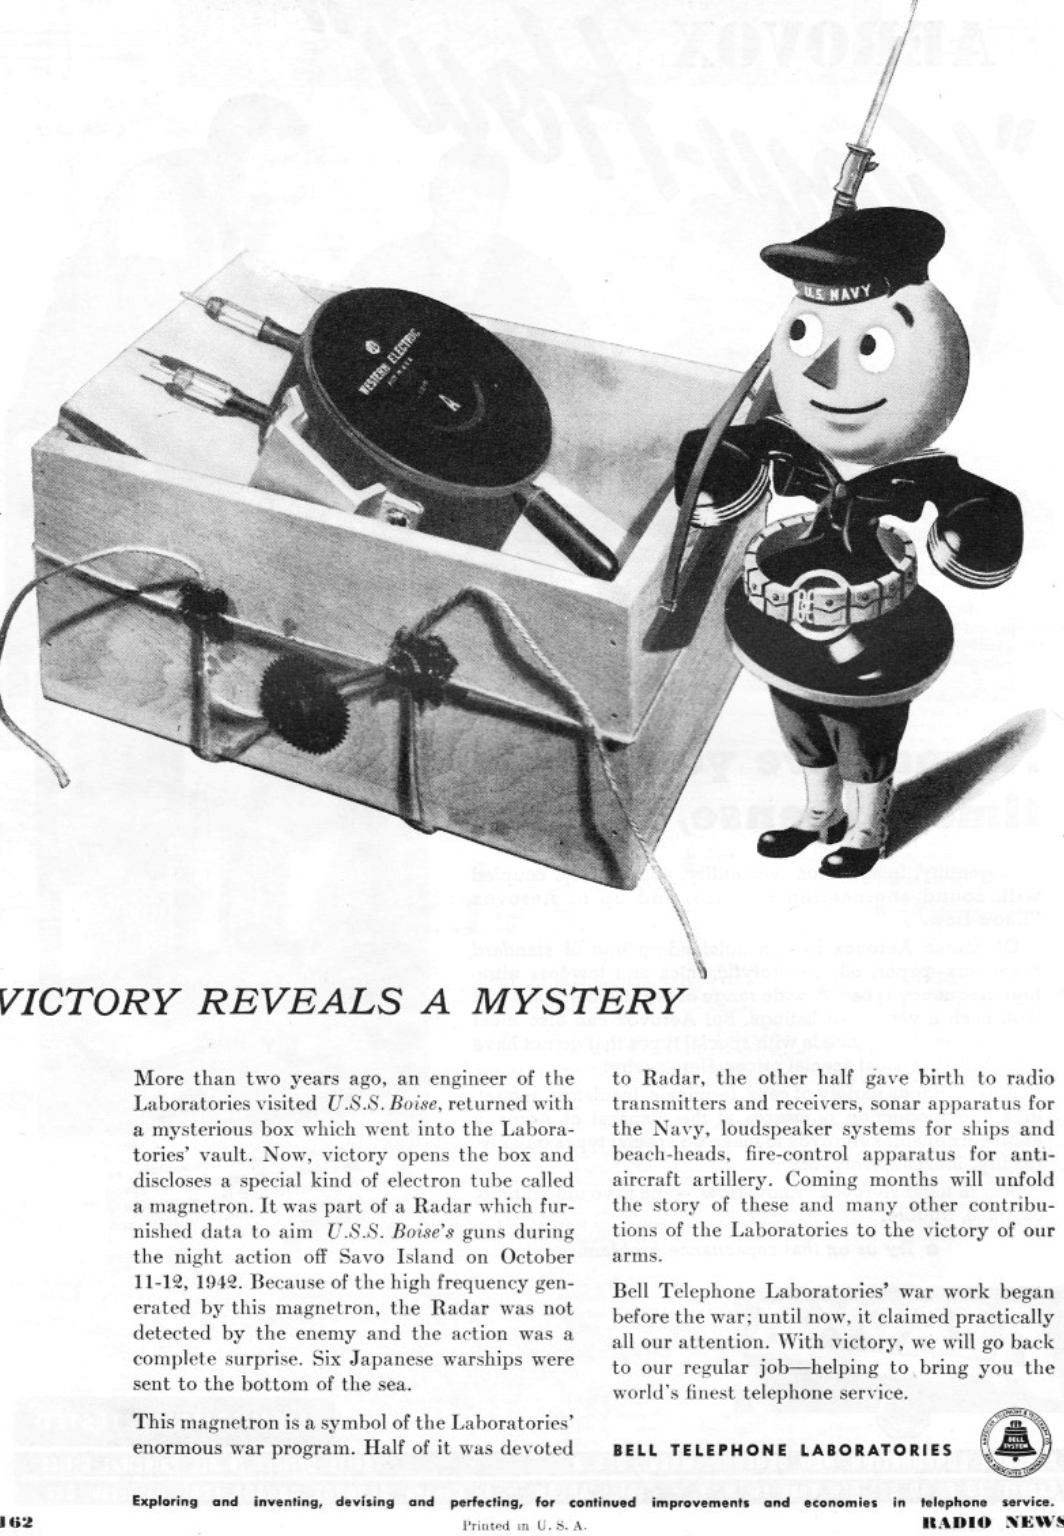 Реклама Bell Telephone Laboratories описывающая магнетрон — часть радара, 1945 г.